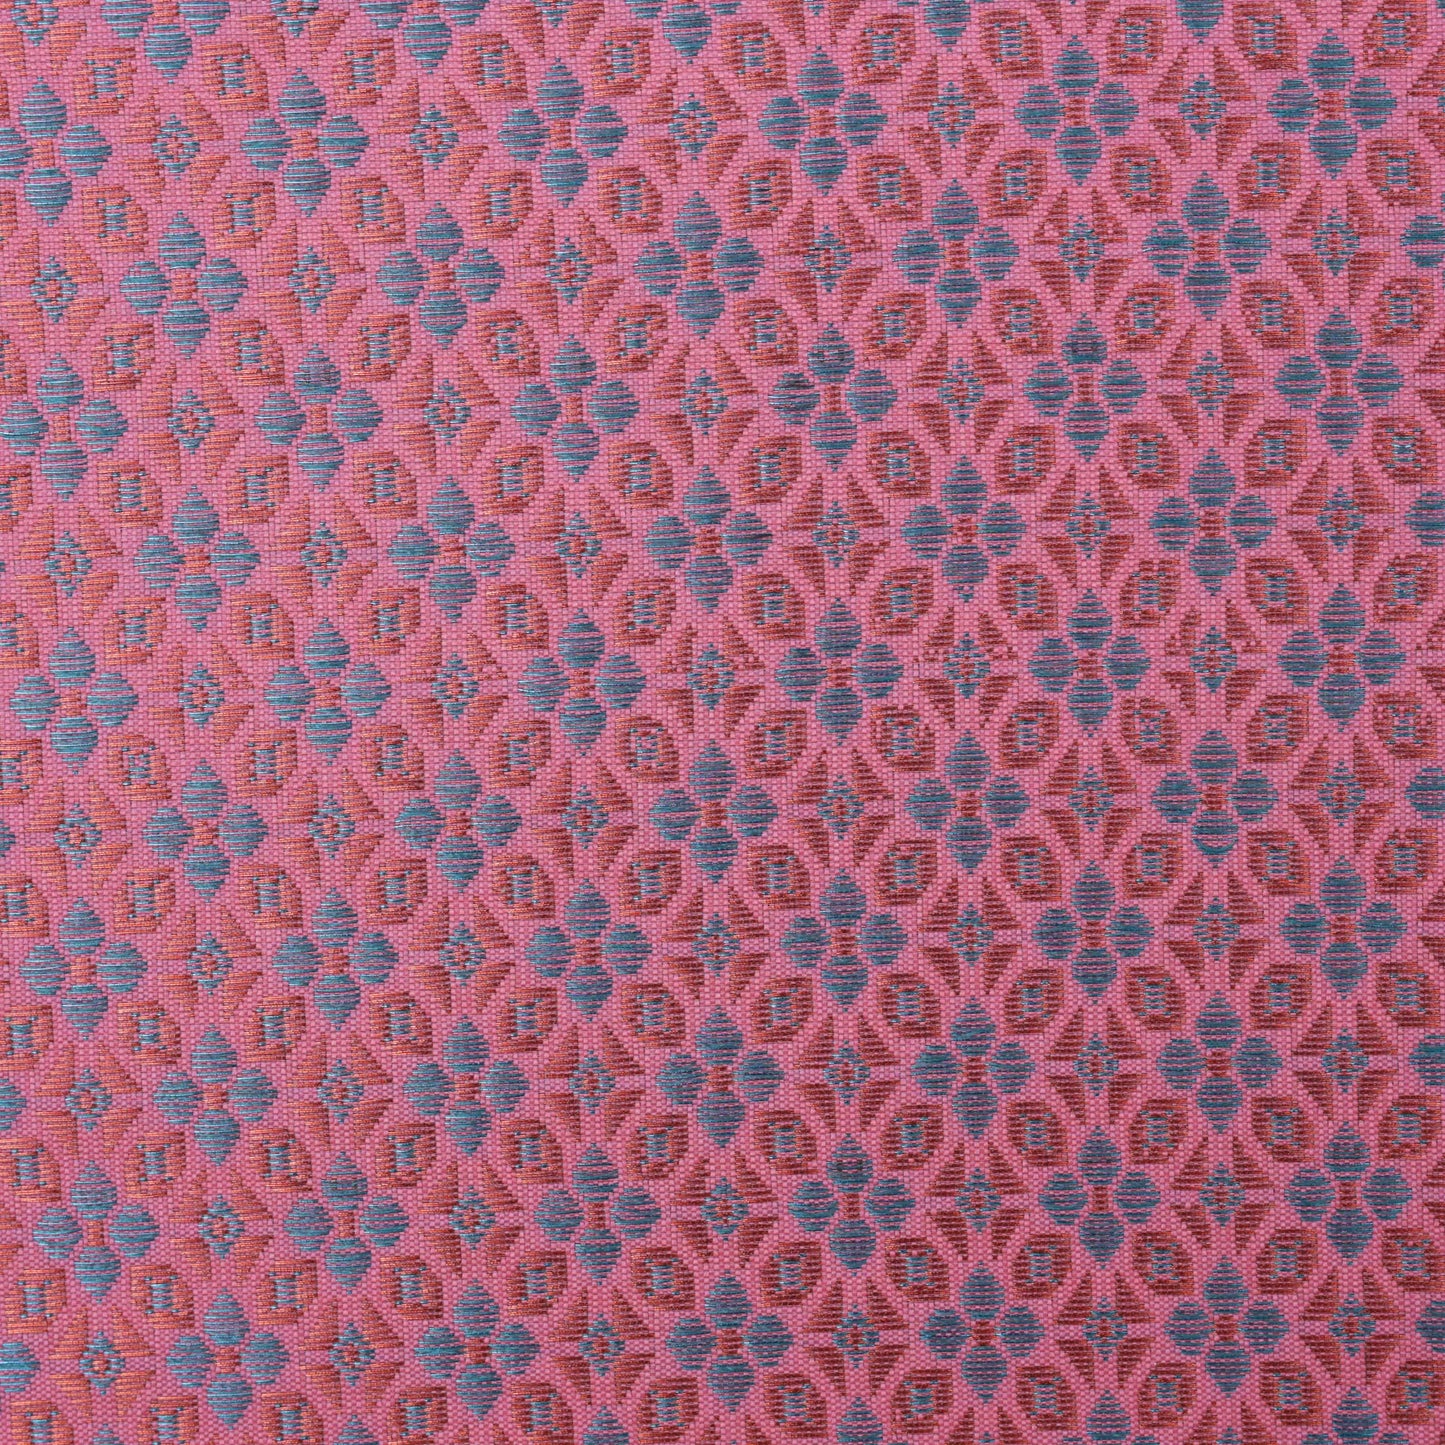 PINK Color Brocade Fabric